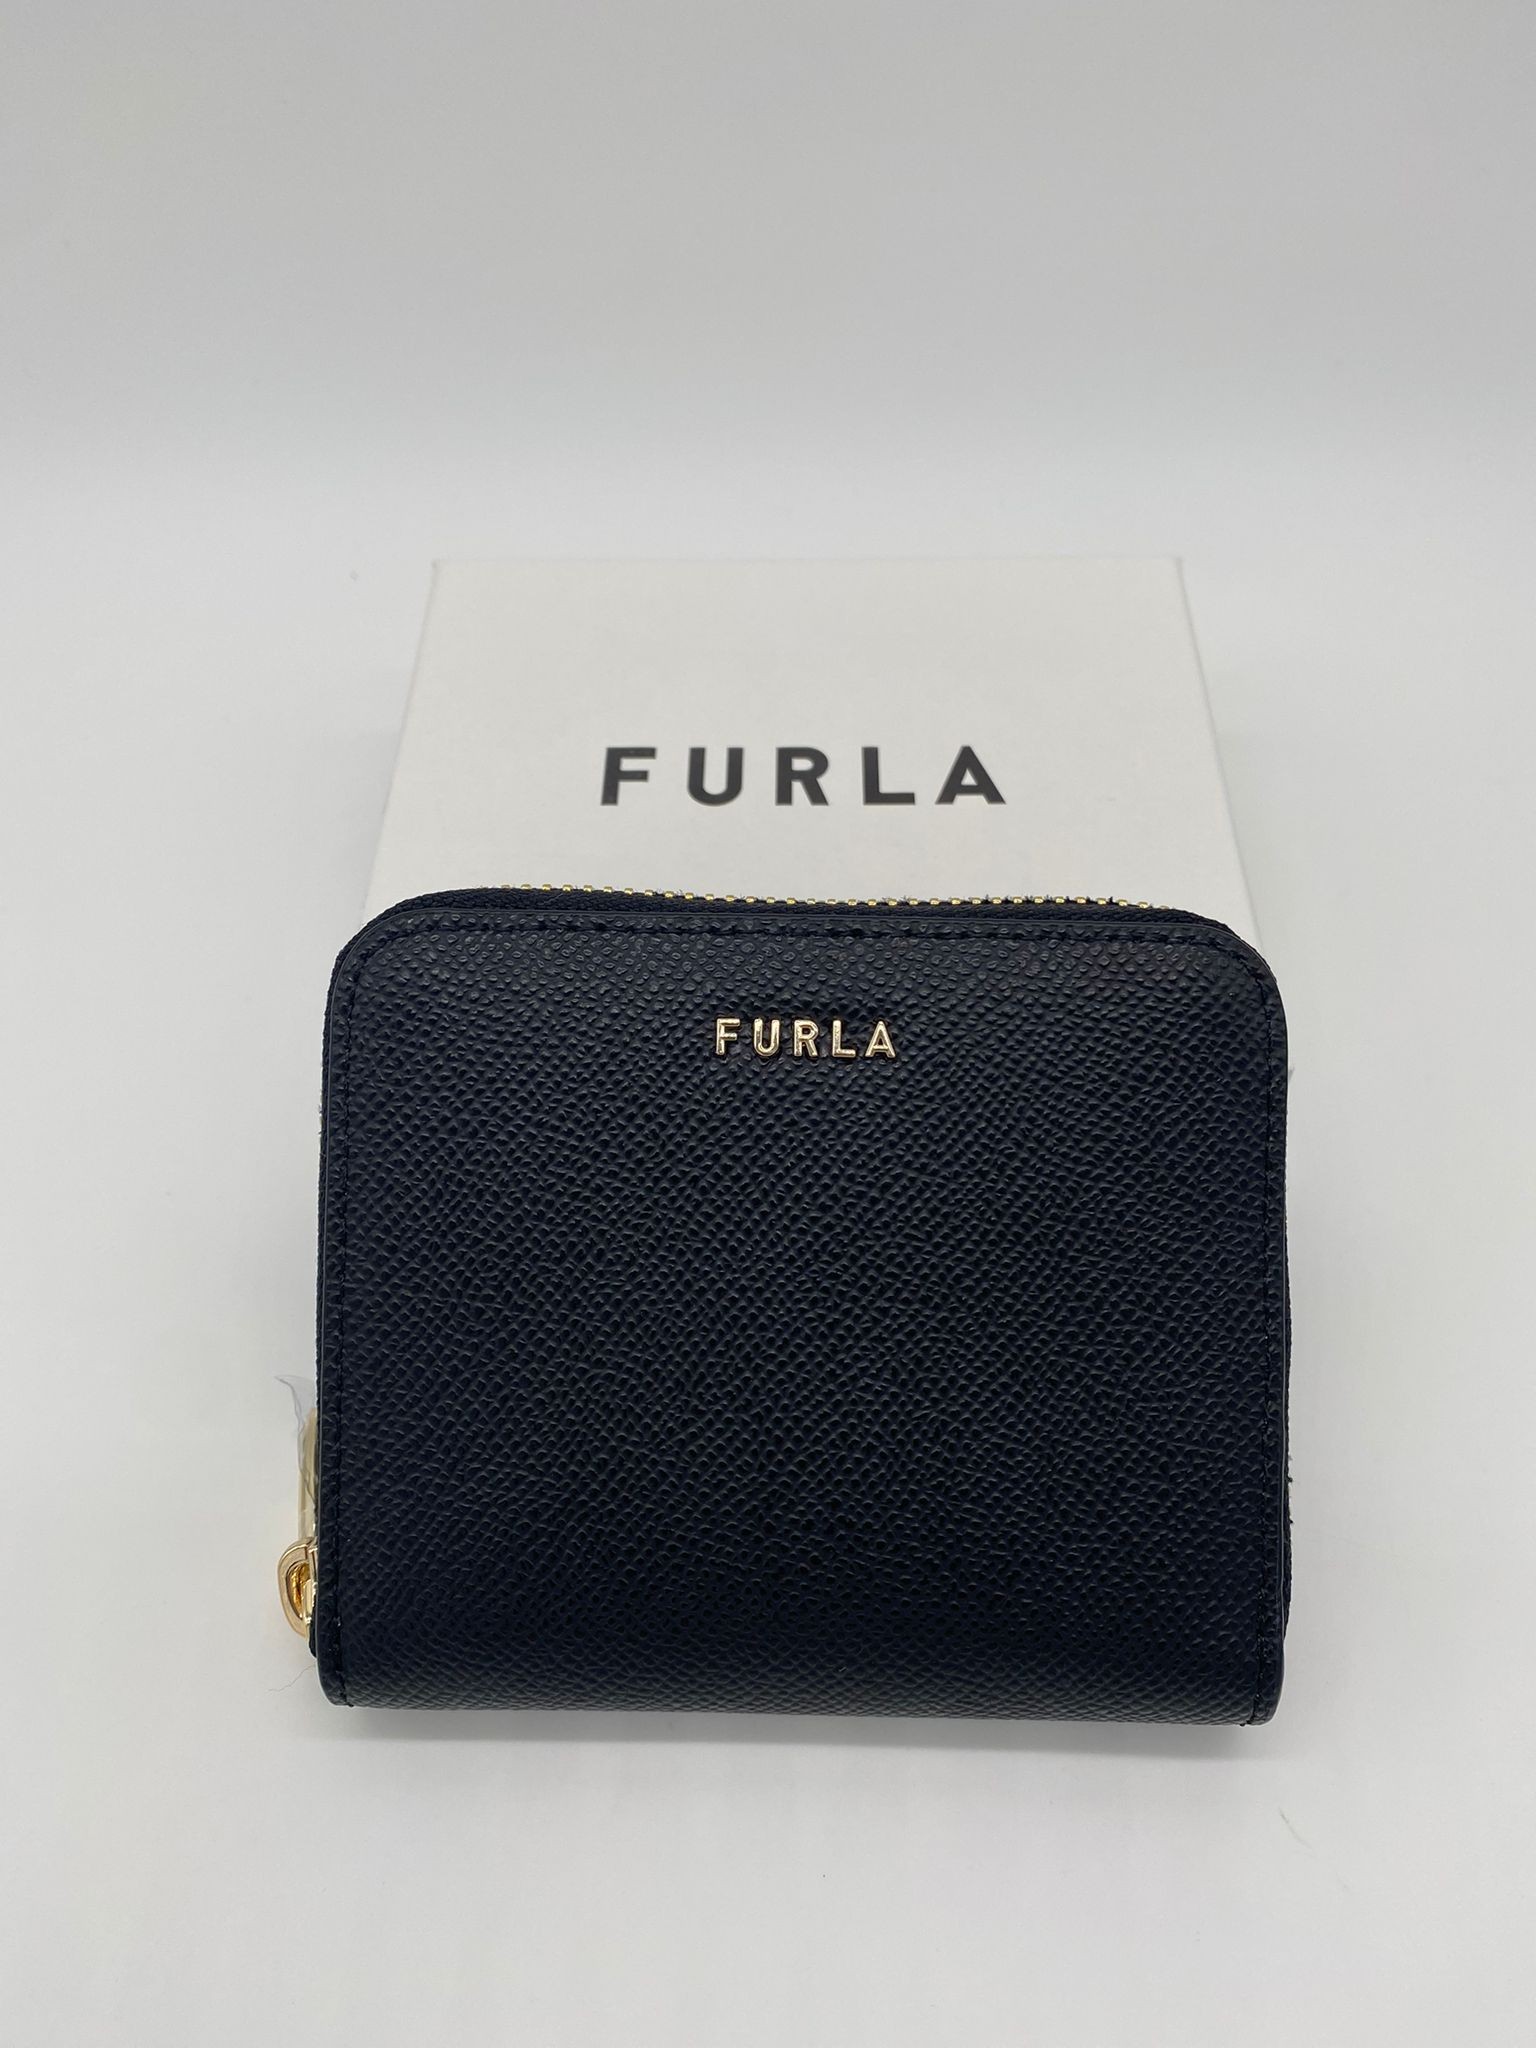 Furla Zip Around Purse Classic - Nero / Black - One Size